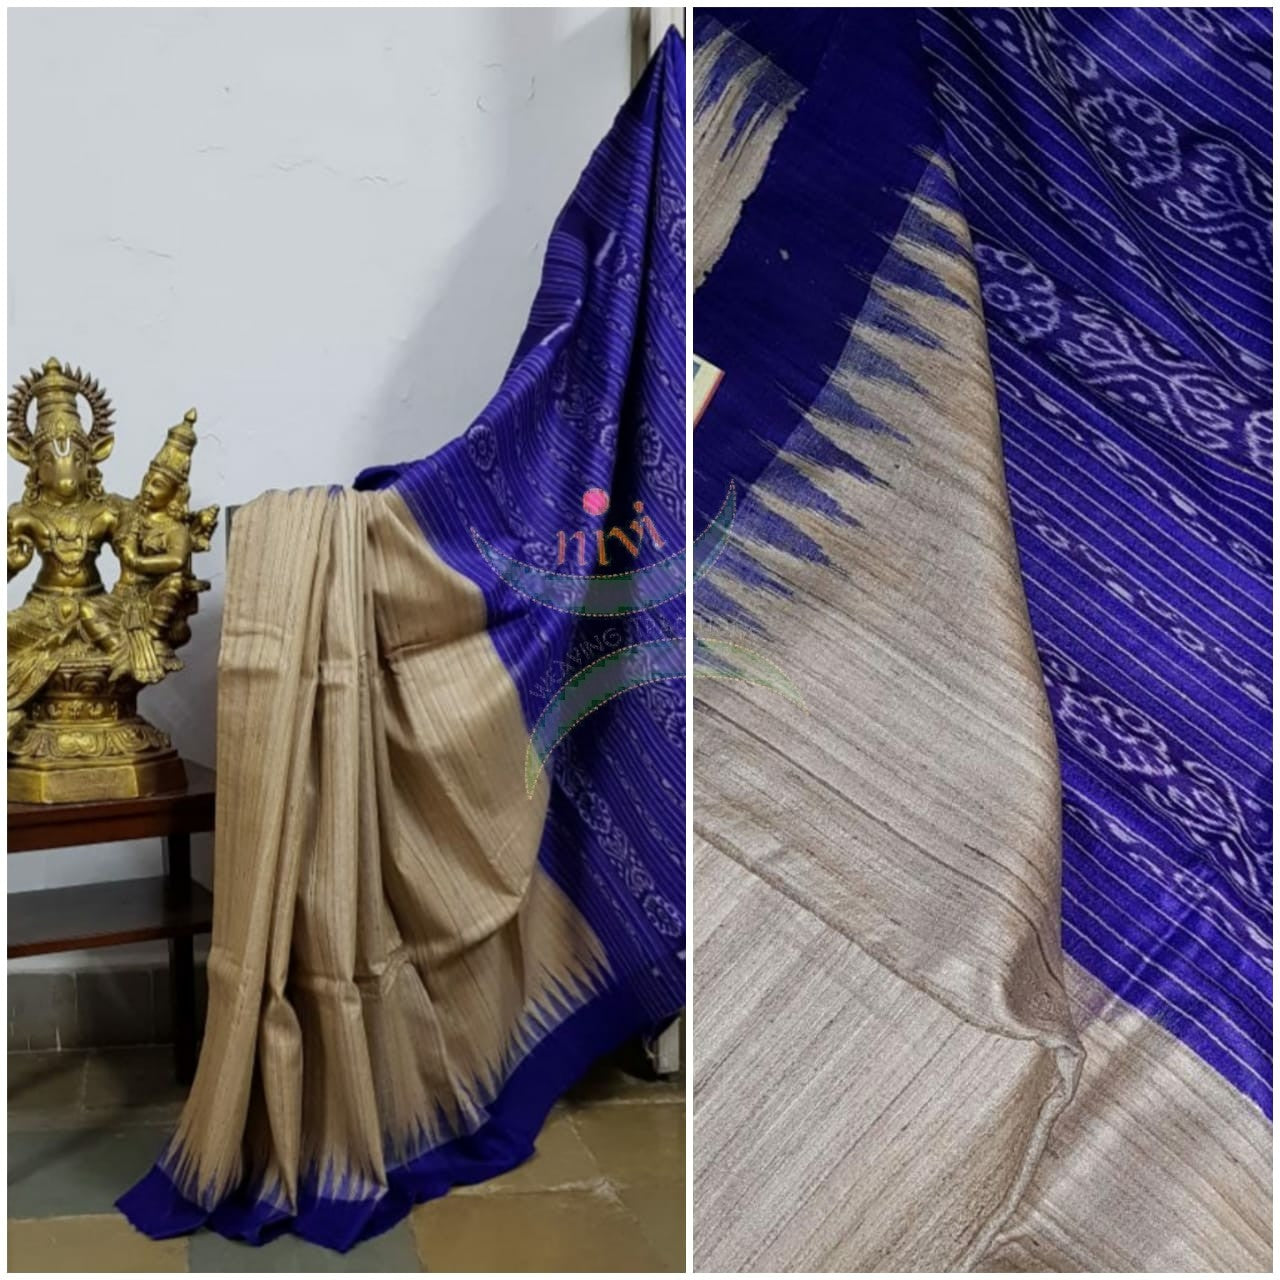 Handloom sambalpuri geecha tussar with contrasting royal blue temple border and pallu.